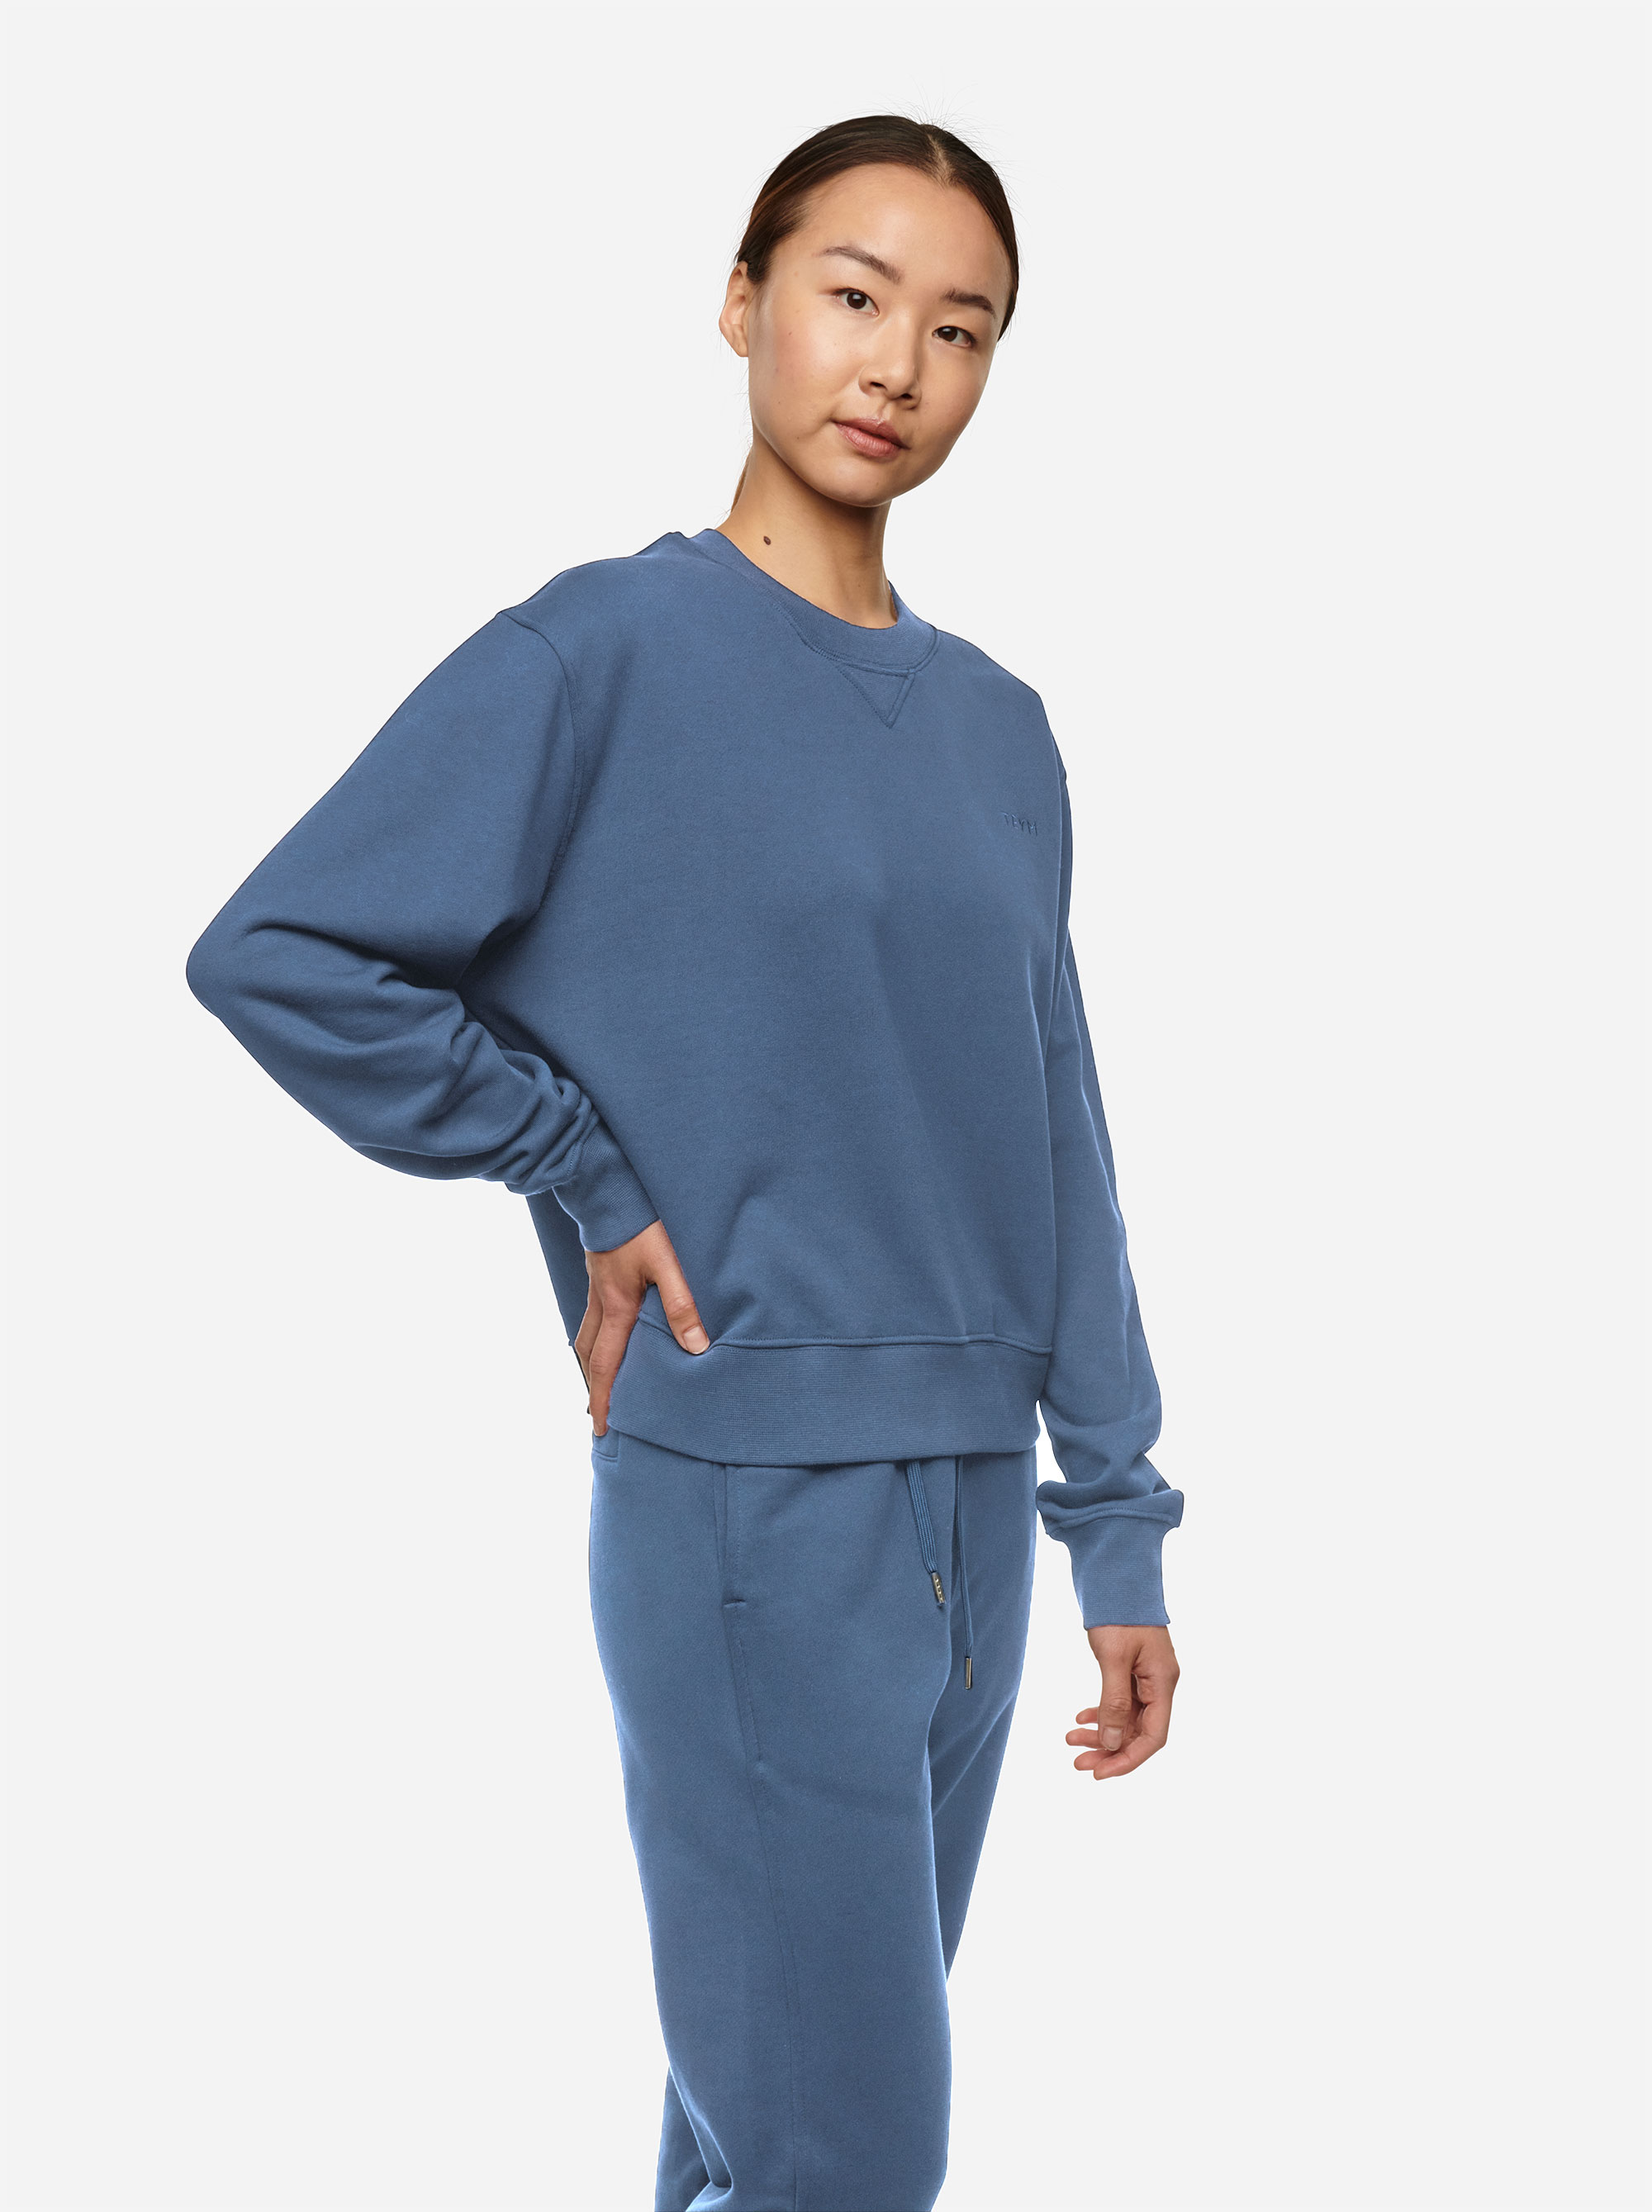 Teym - The Sweatshirt - Blue Grey - Women - 1